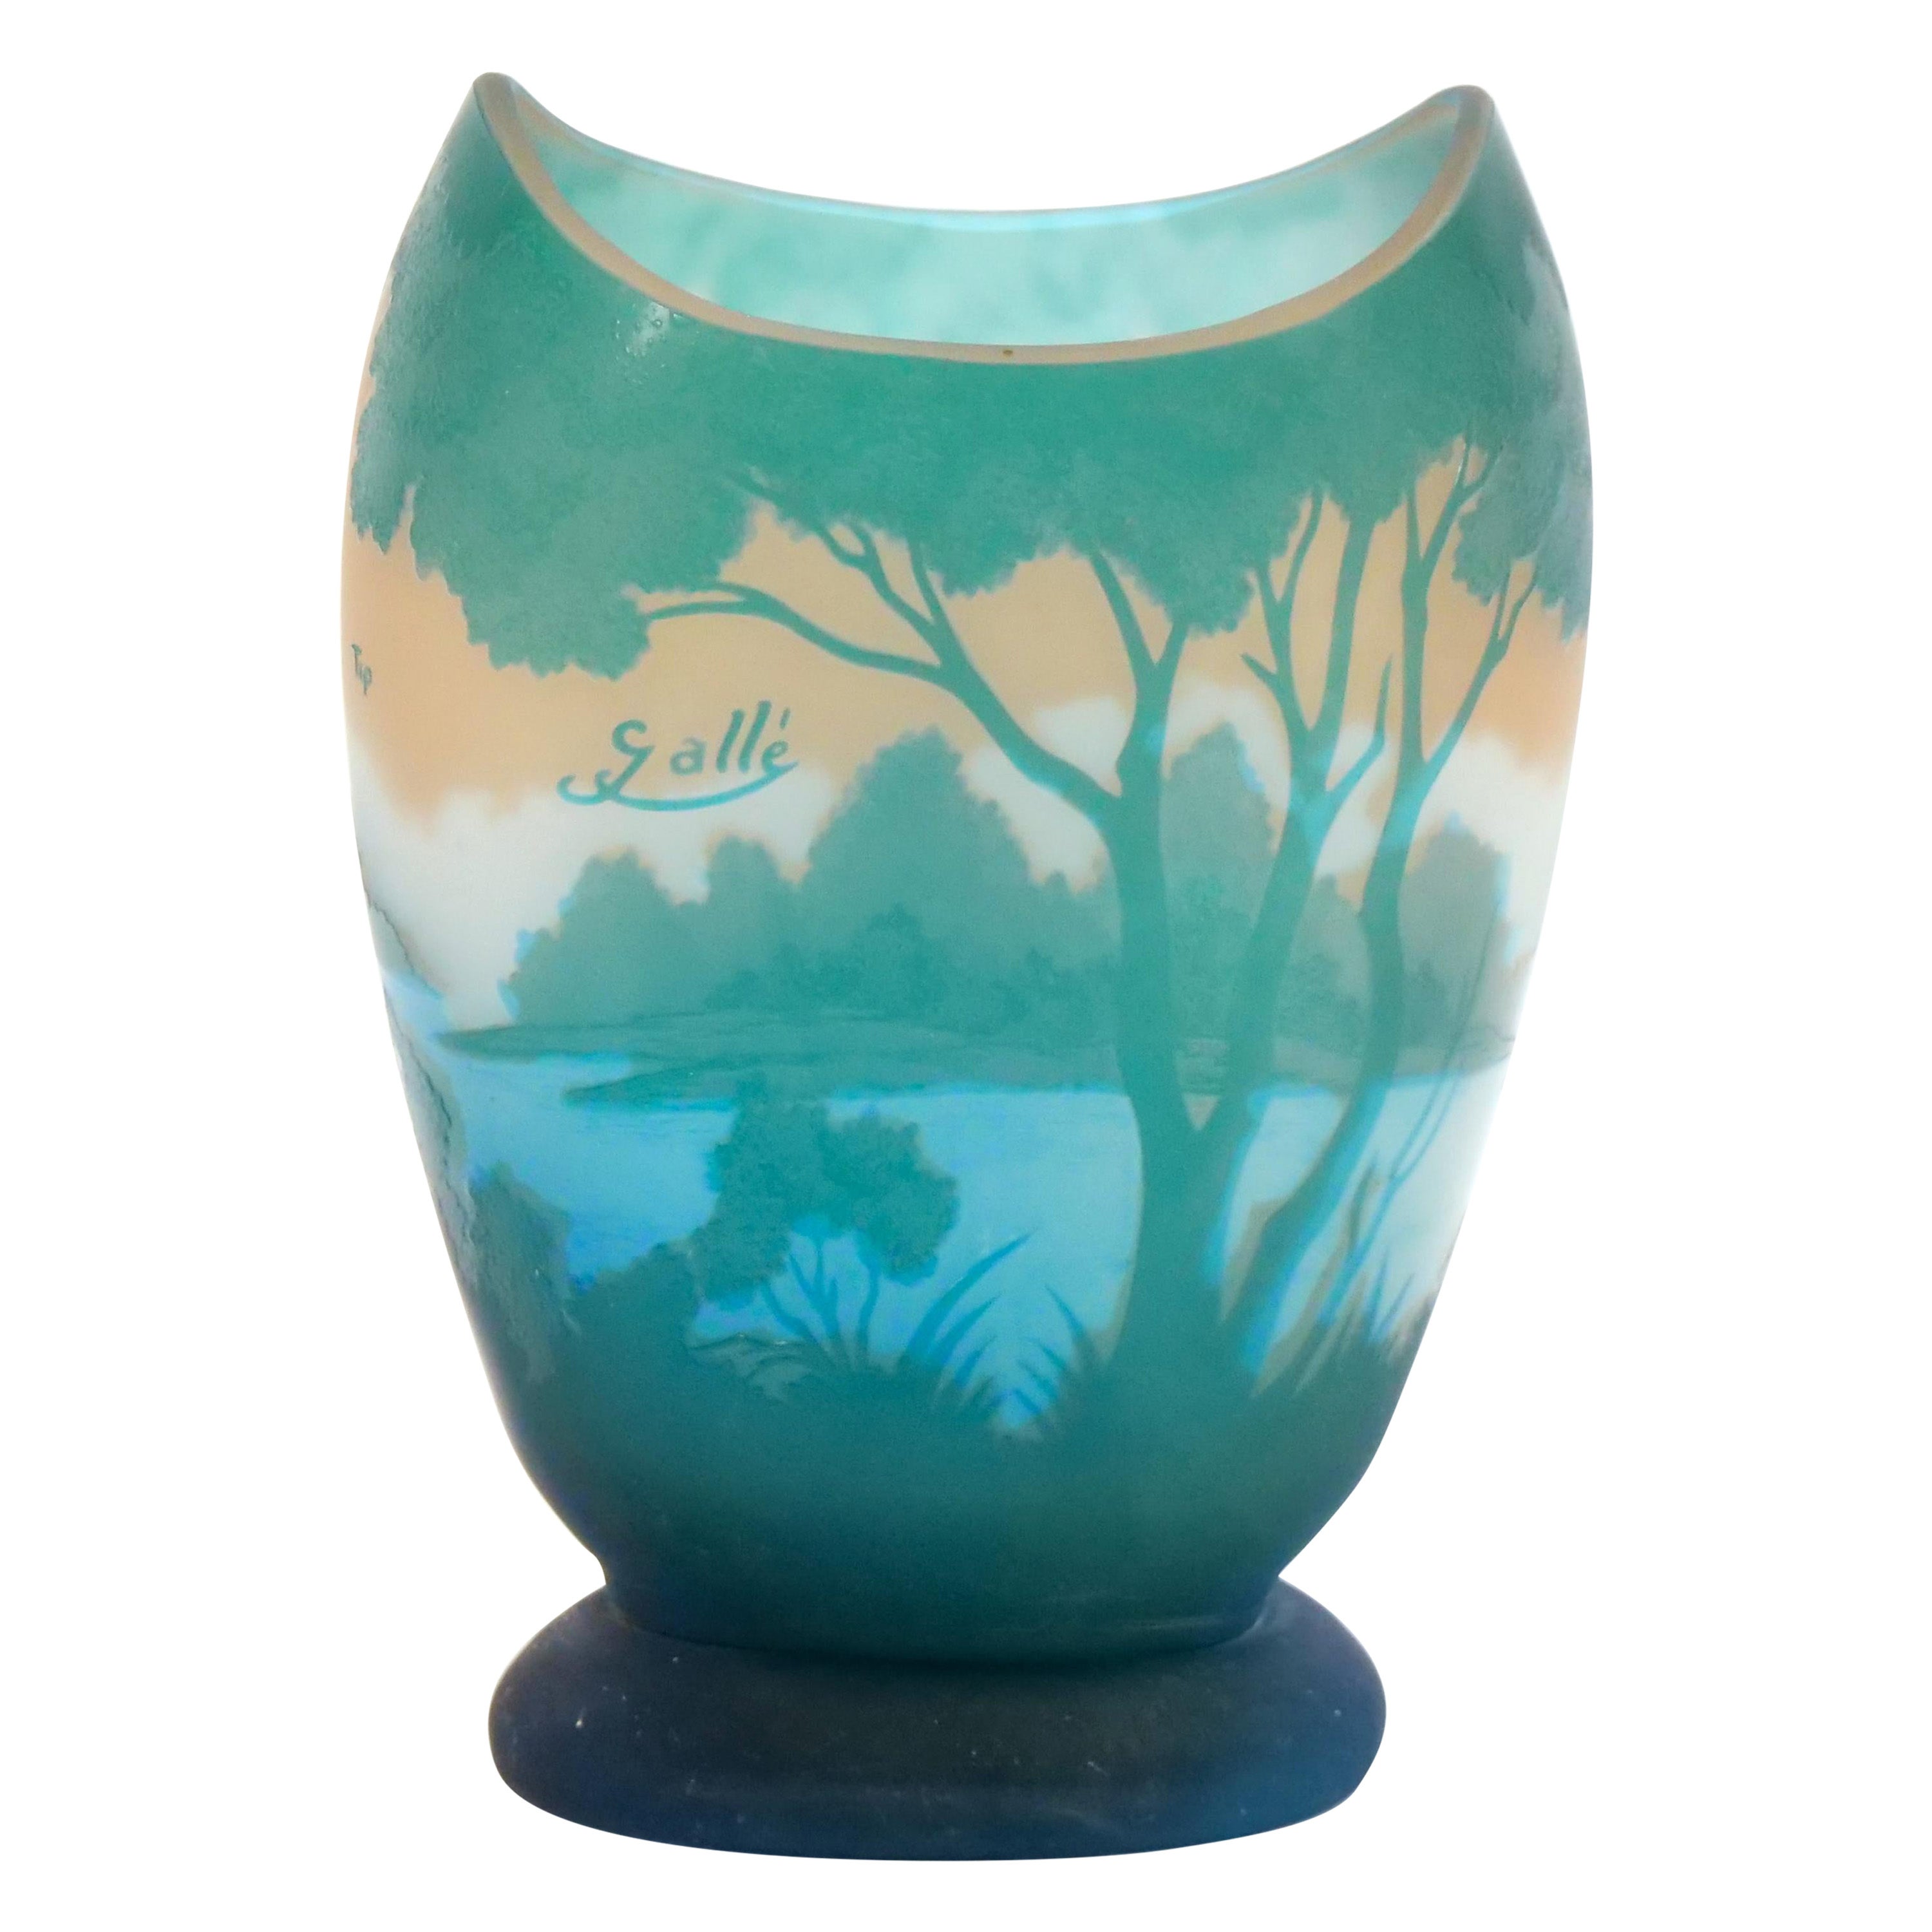 Galle Turquoise Cameo Glass Art Nouveau Decorative Vase For Sale